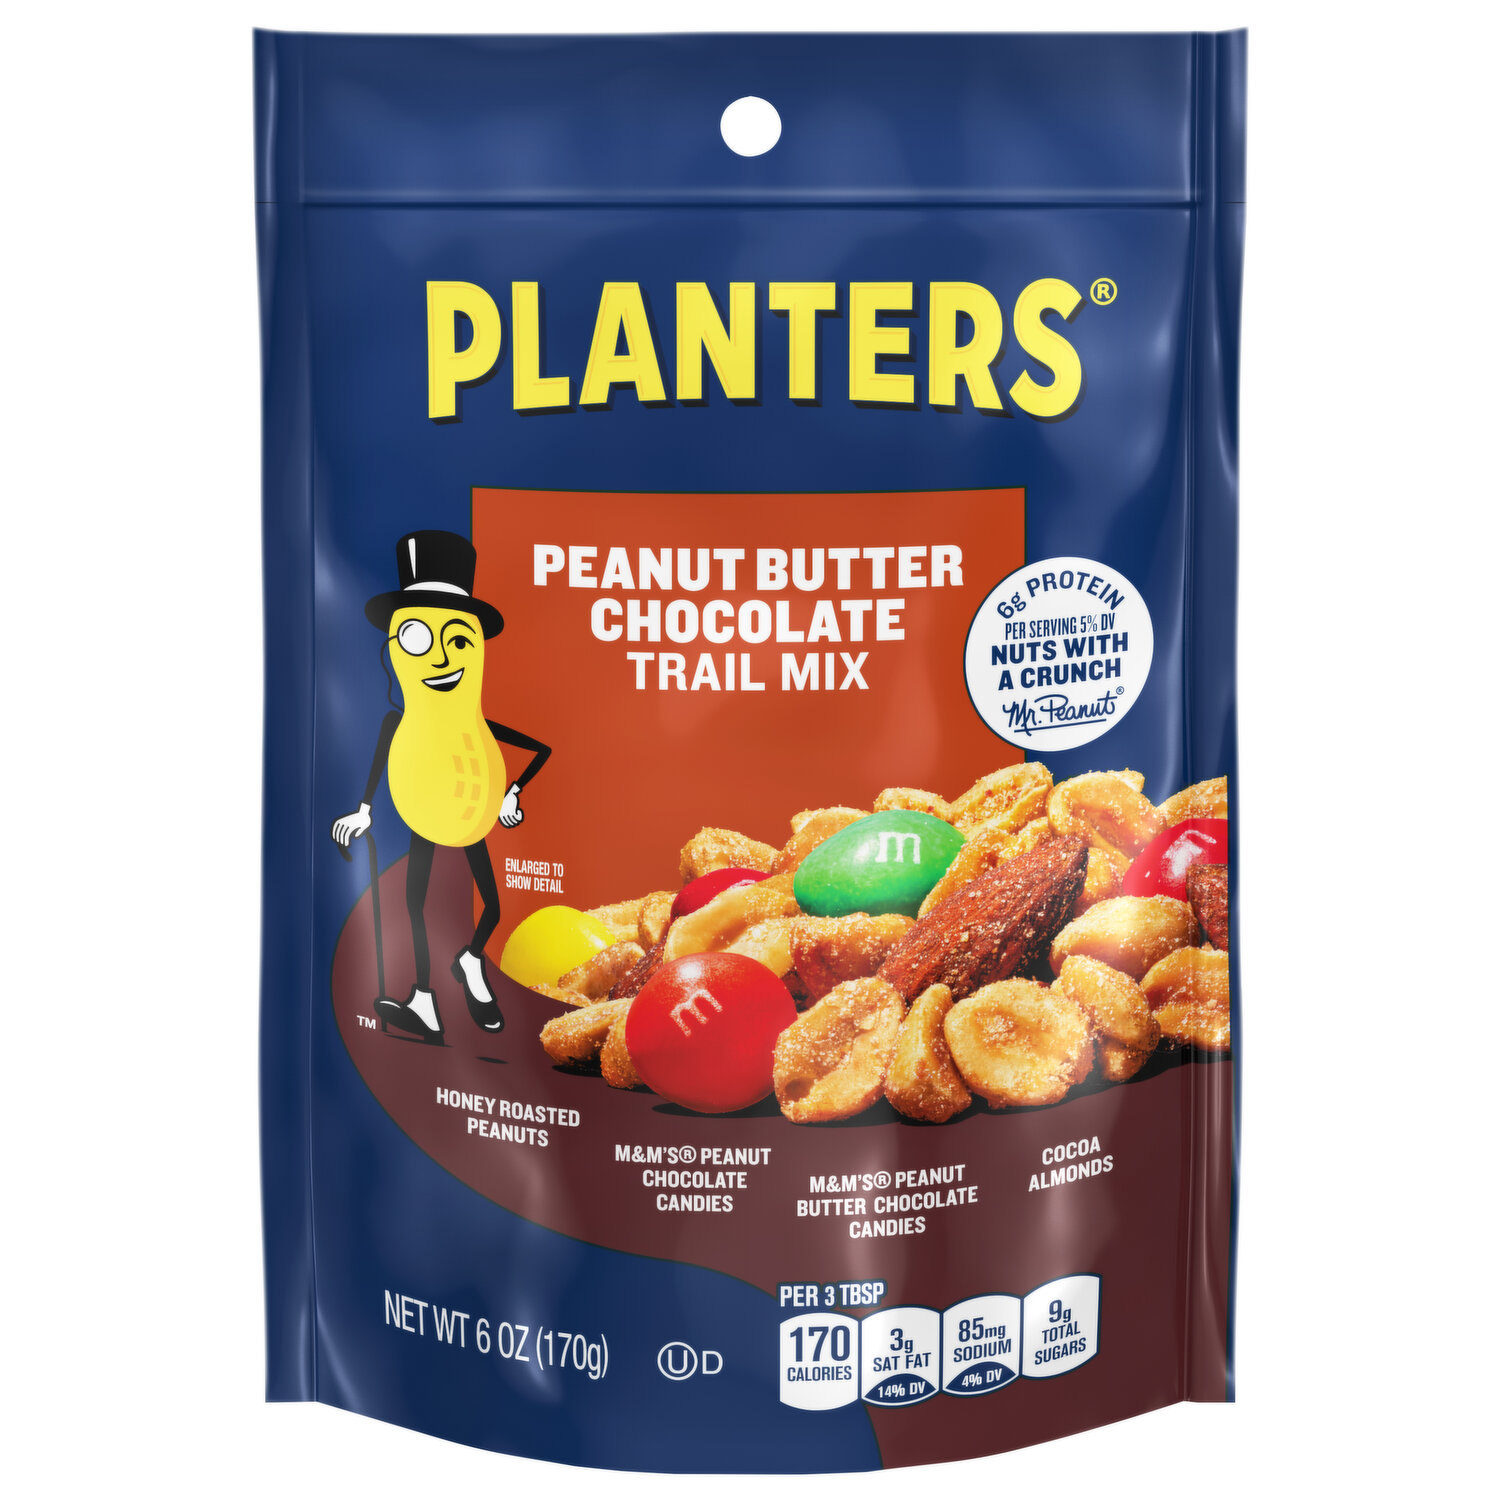 PLANTERS® NUT-RITION® Snack Nut Mix Essential Nutrients 5.5 oz bag